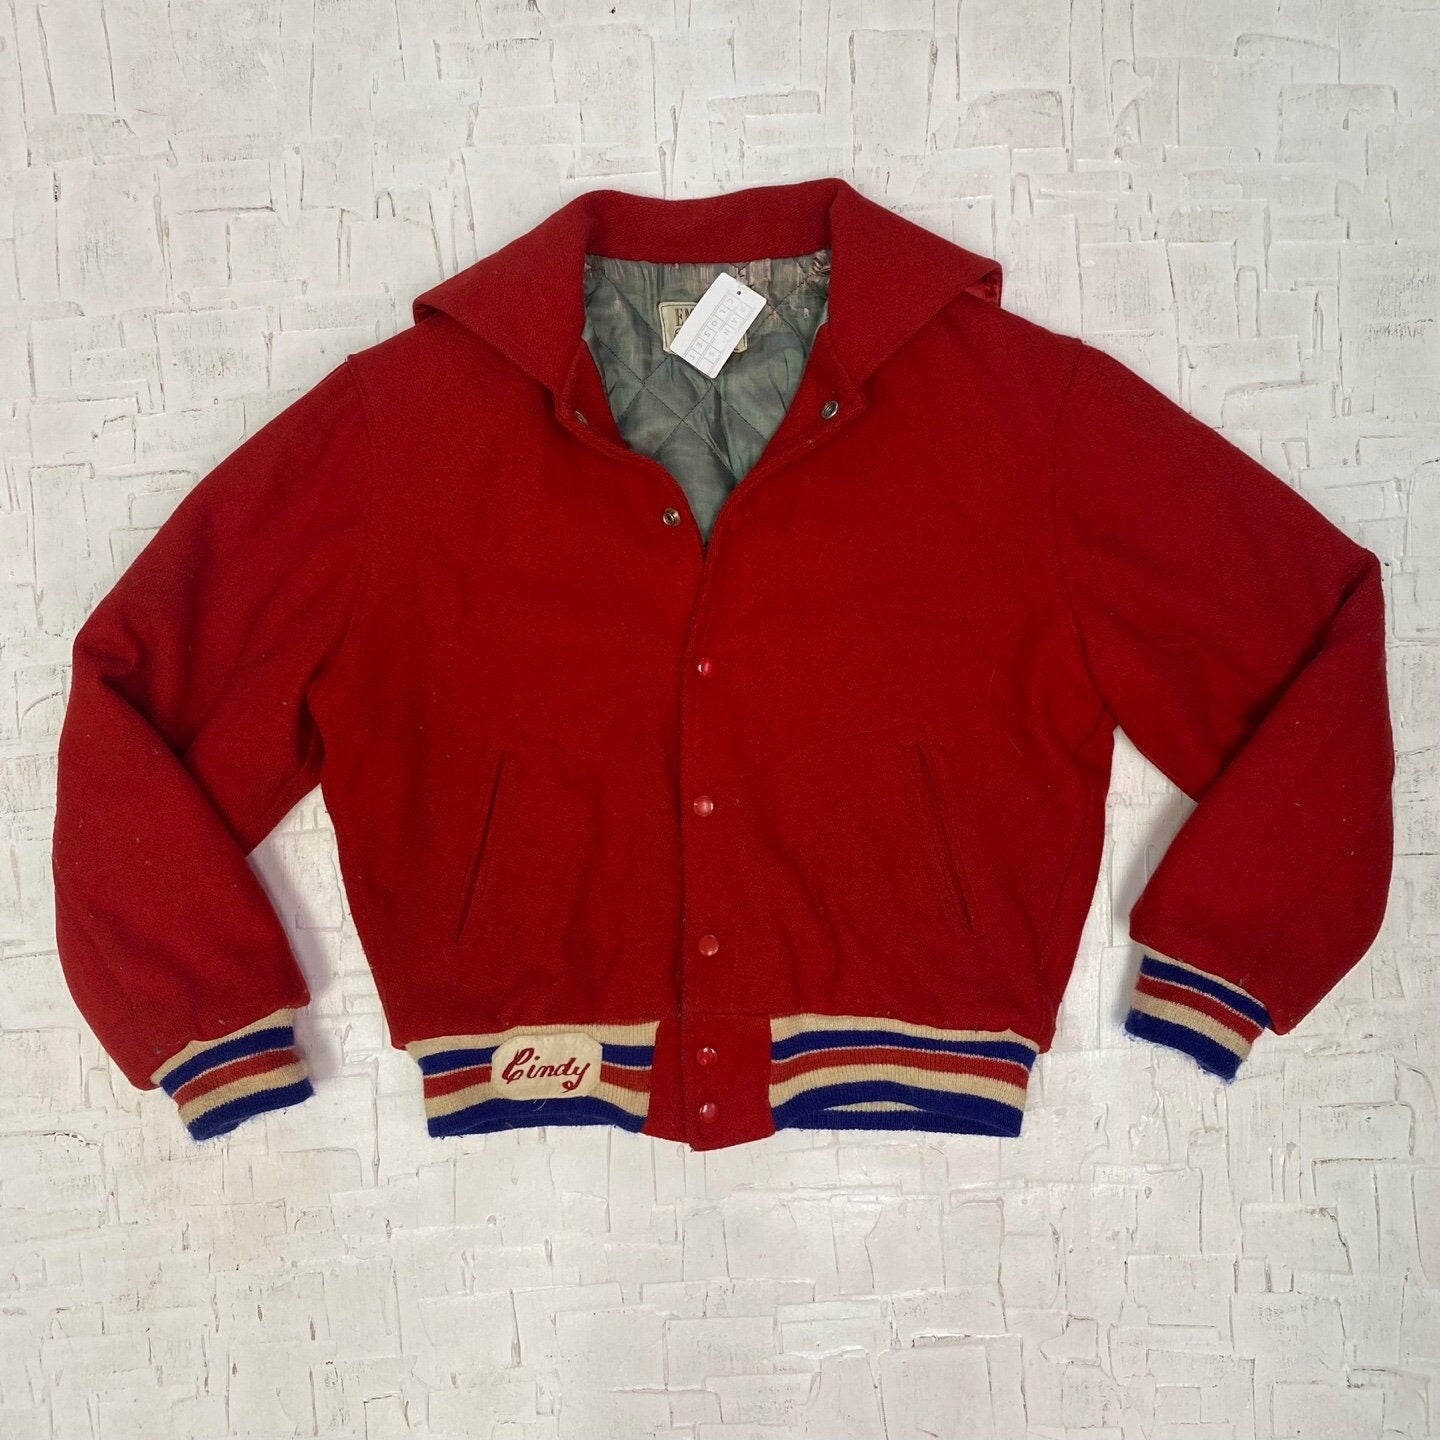 Vintage Southview Saints Cheerleading Red Varsity Jacket | Vintage Jacket | Empire Sporting Goods New York | Cindy | Size M | SKU: M-3342